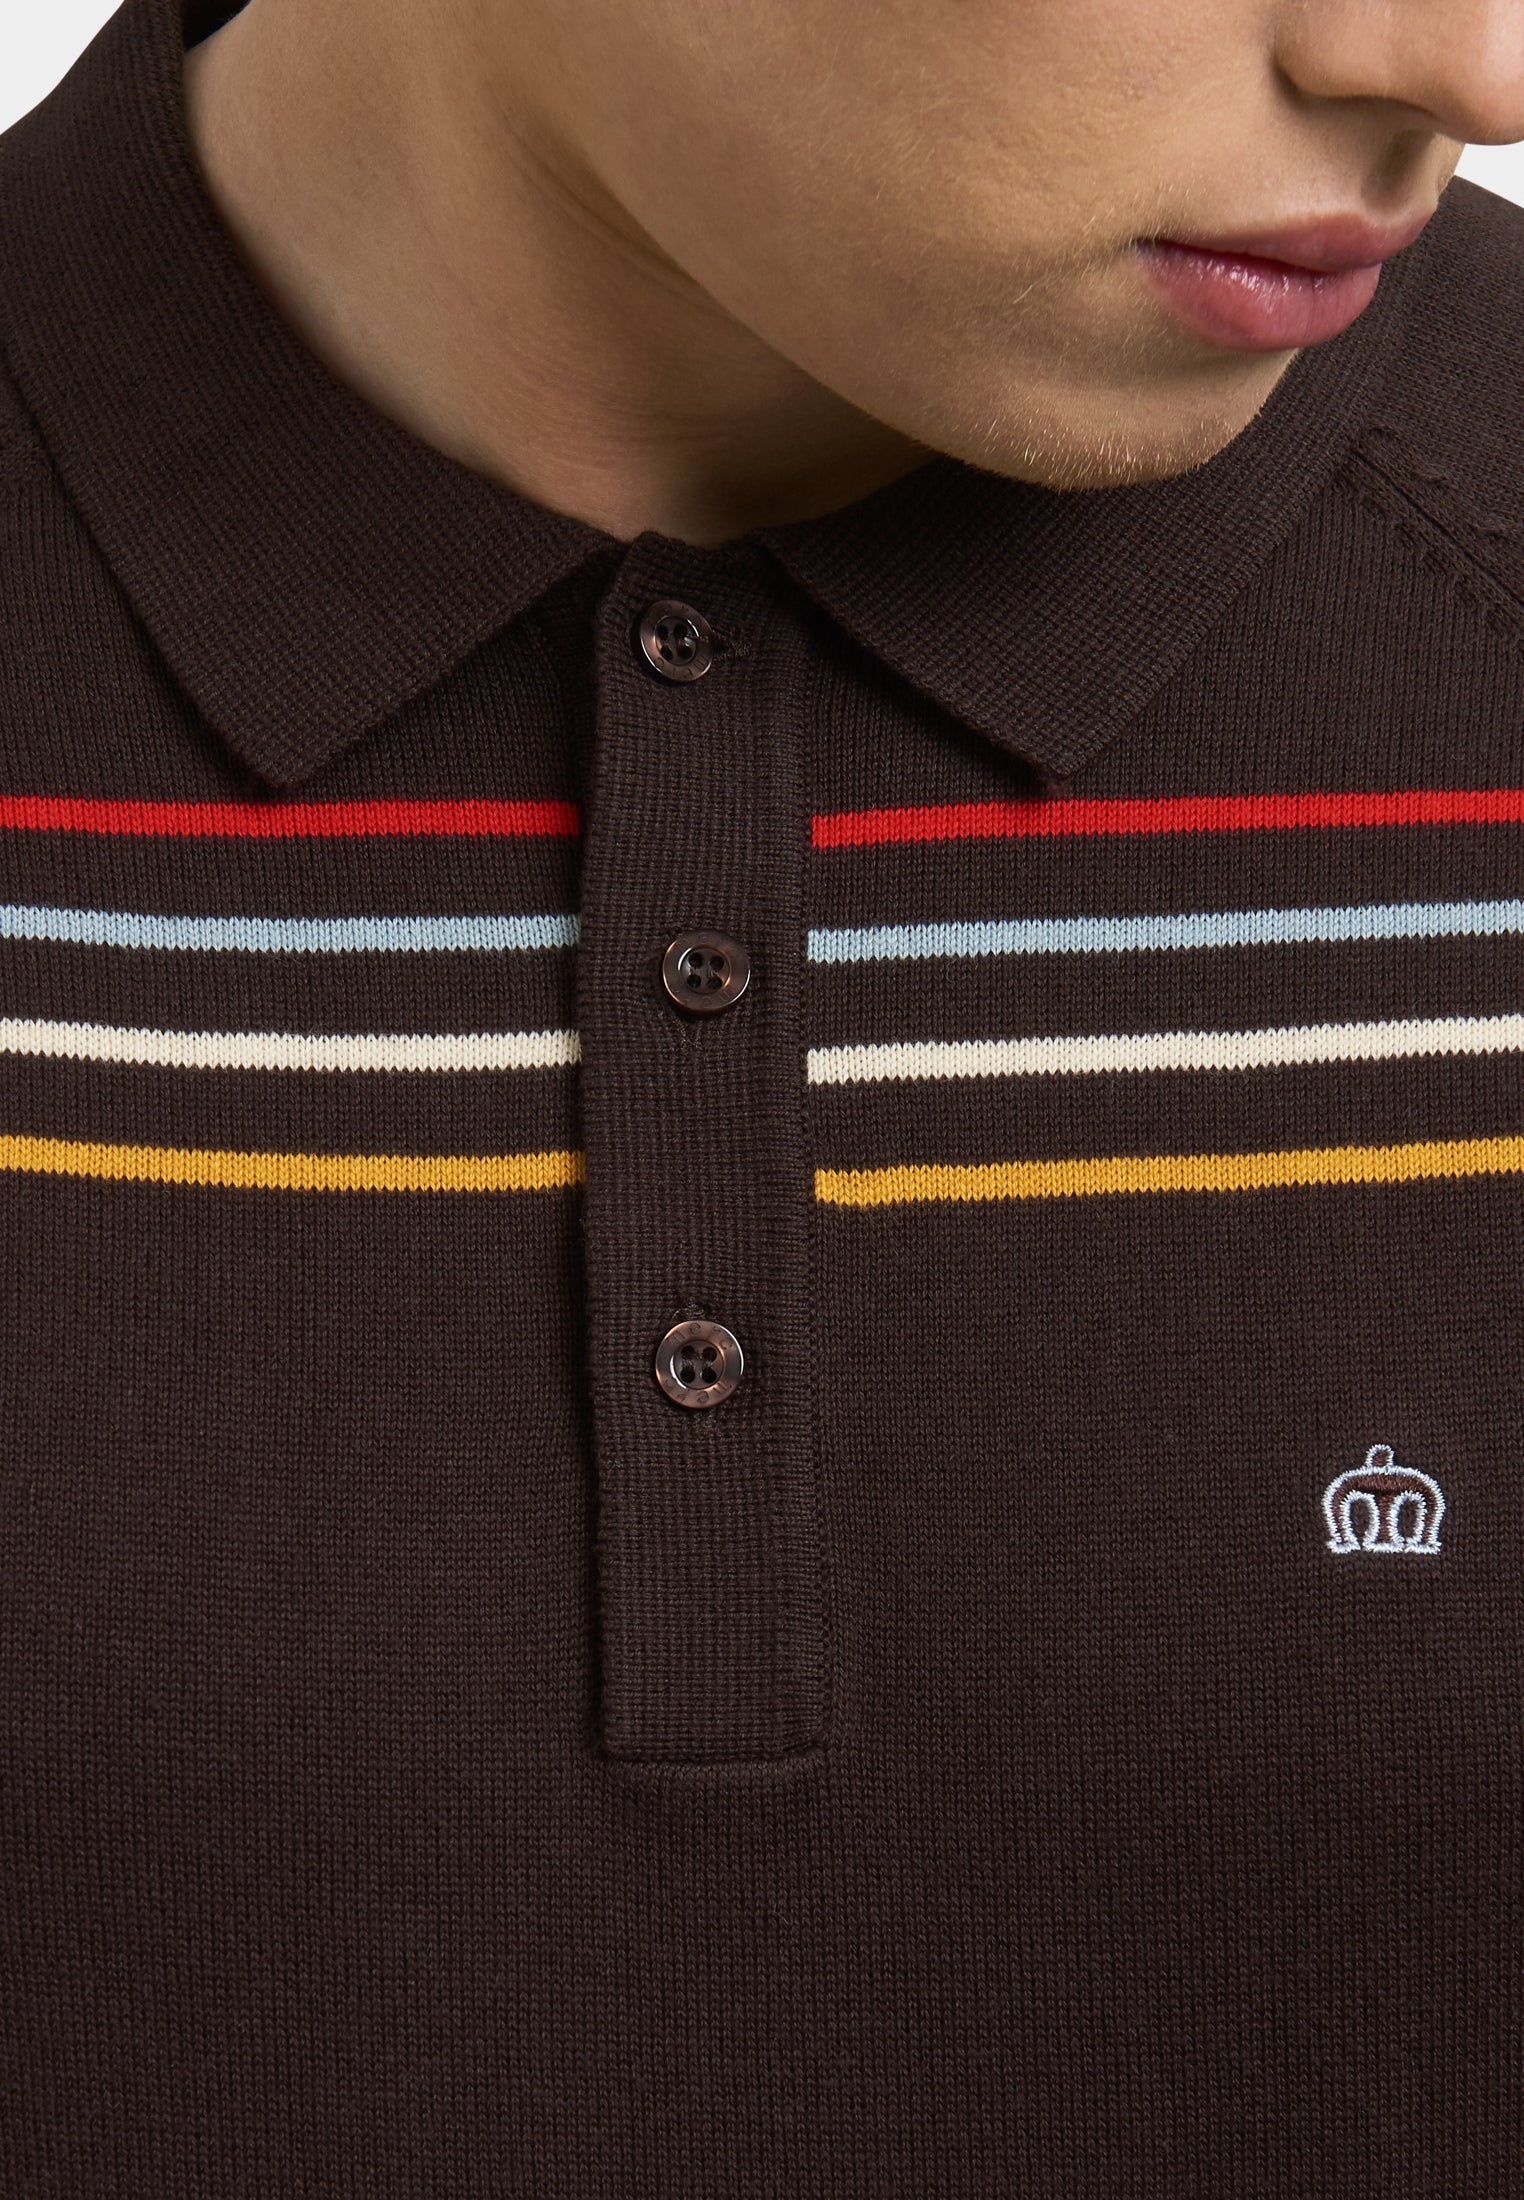 Madison Stripes Knitted Polo Shirt Detail - Merc London